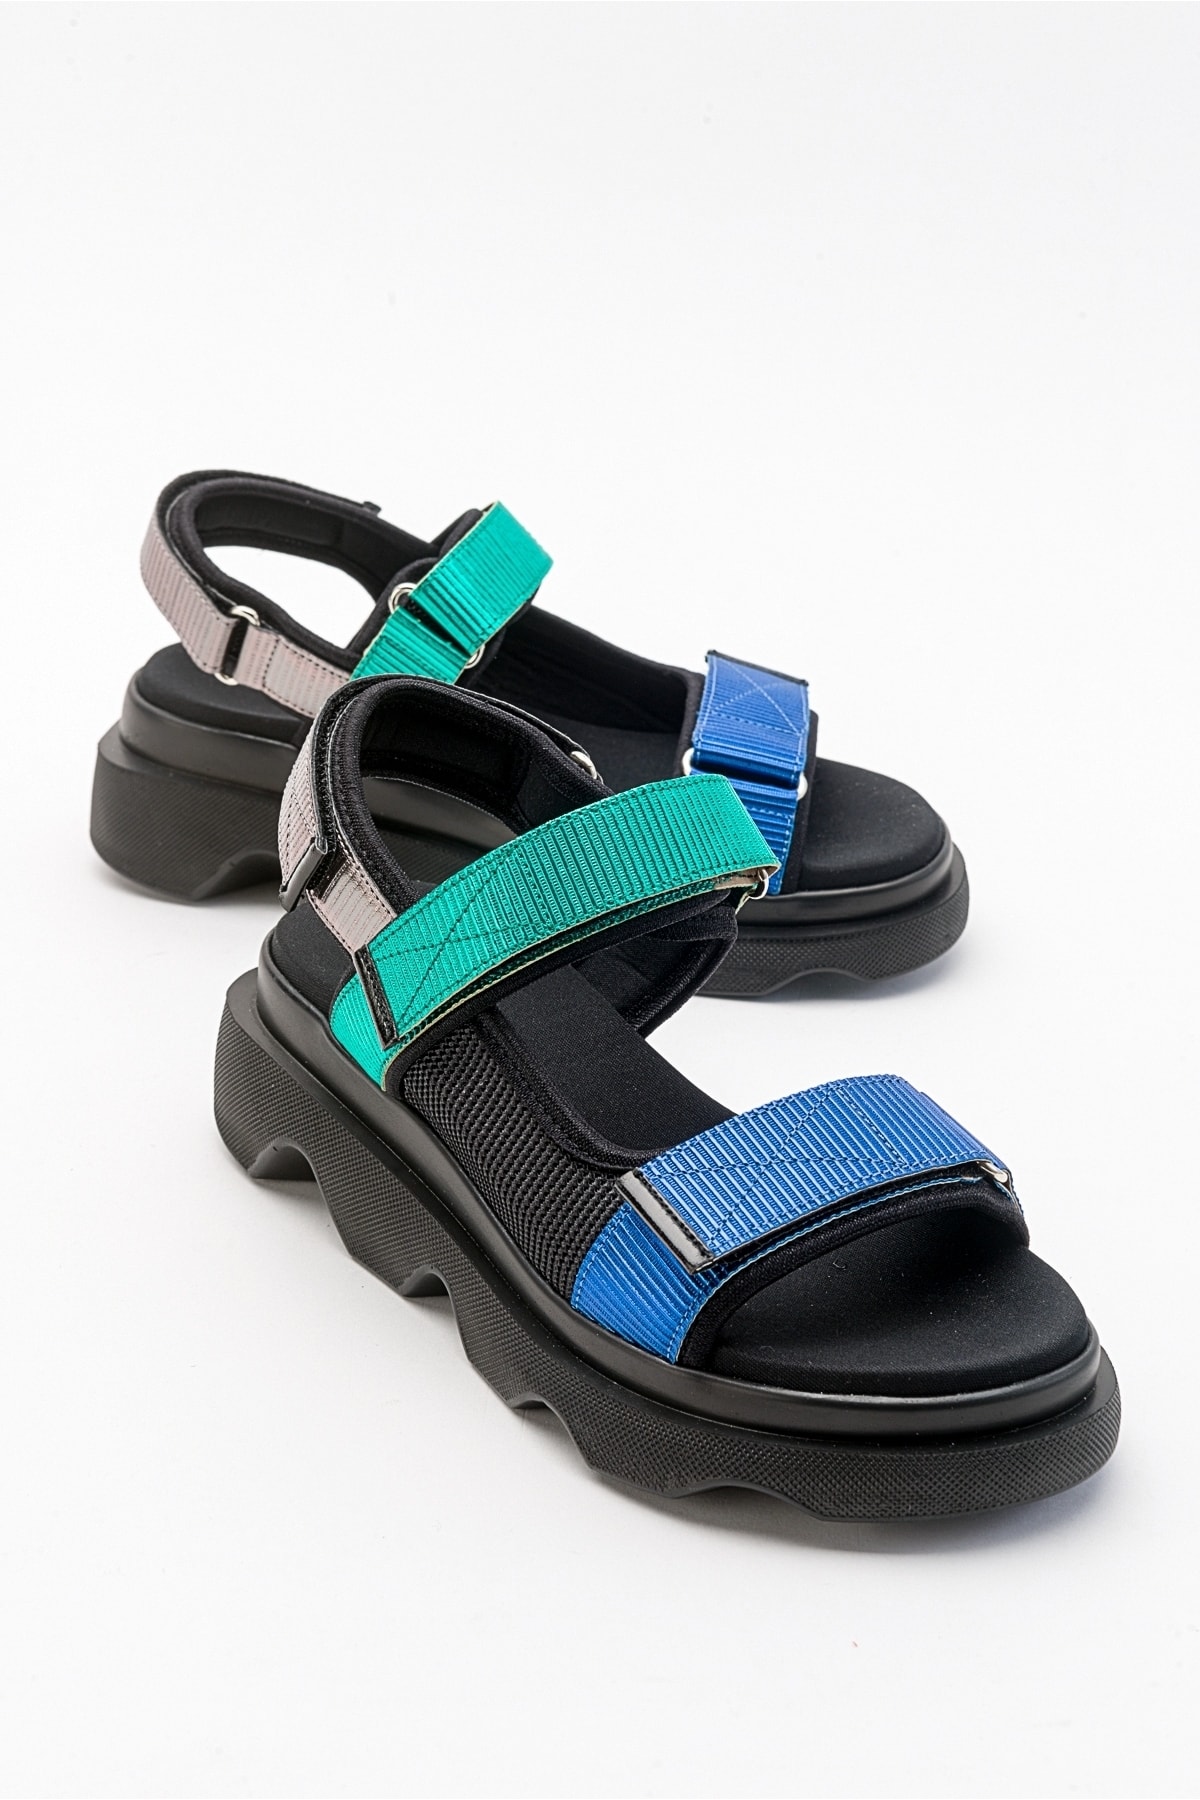 Levně LuviShoes Arey Women's Black Green Multi Sandals